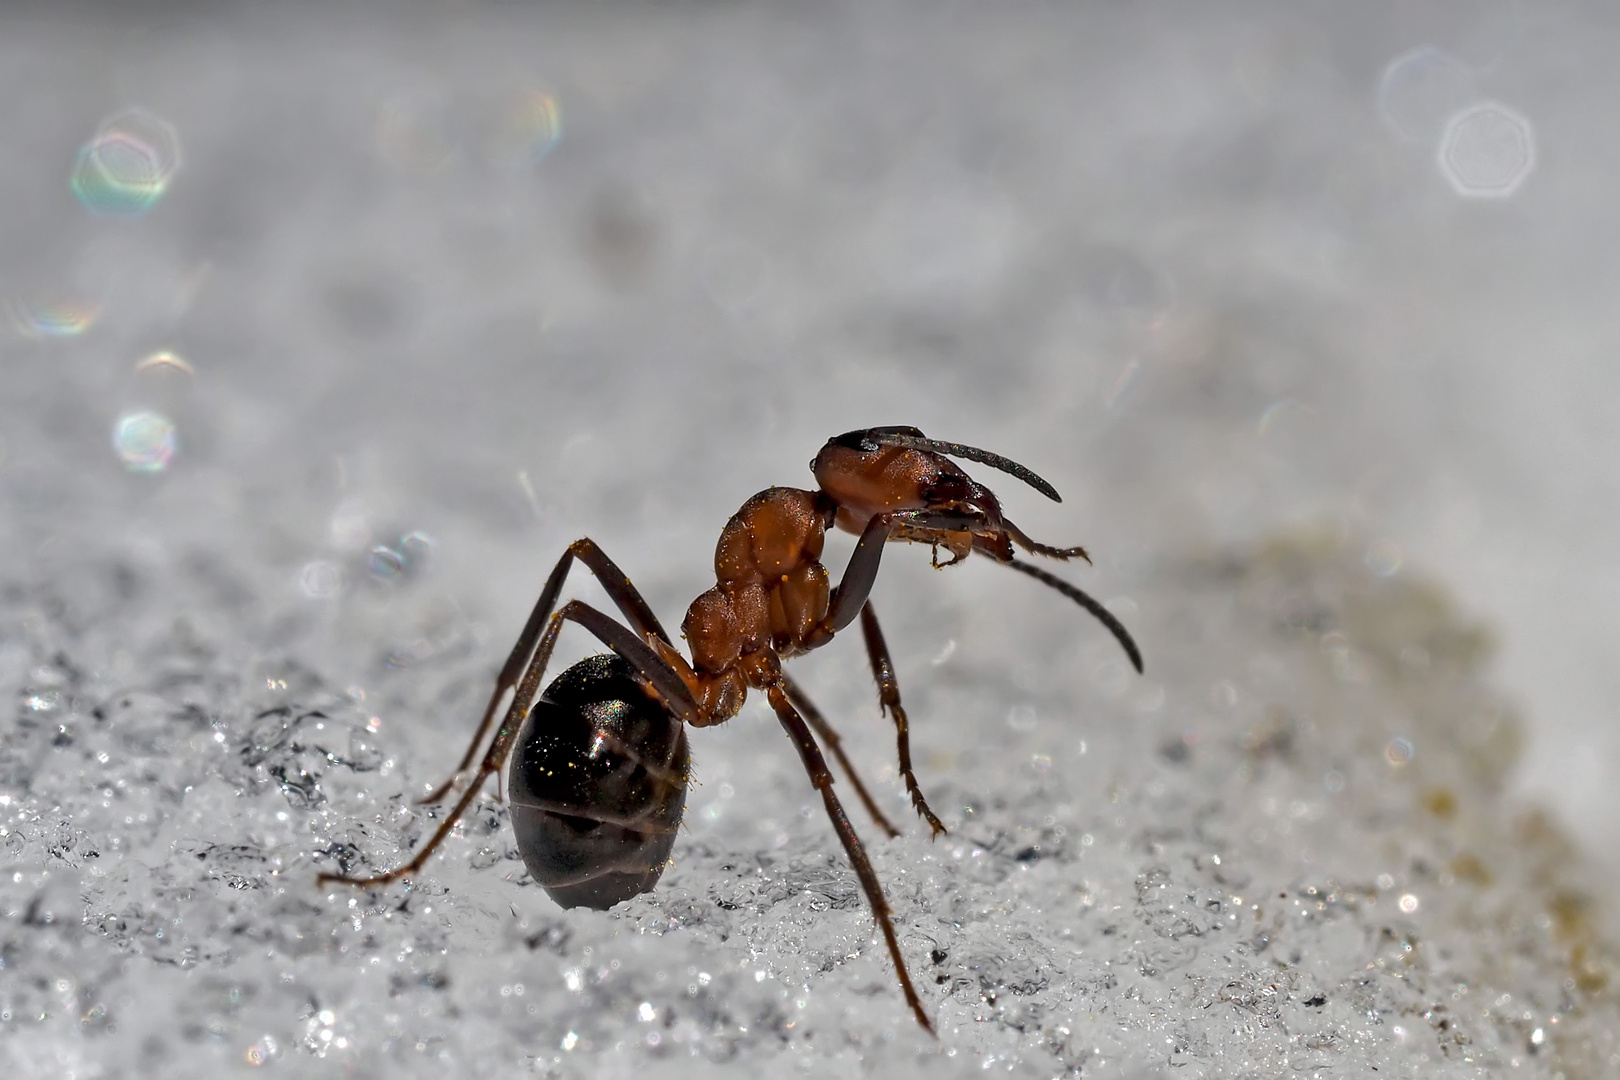 Intensive Körperpflege im Schnee! - La fourmi prend soin de son corps dans la neige...